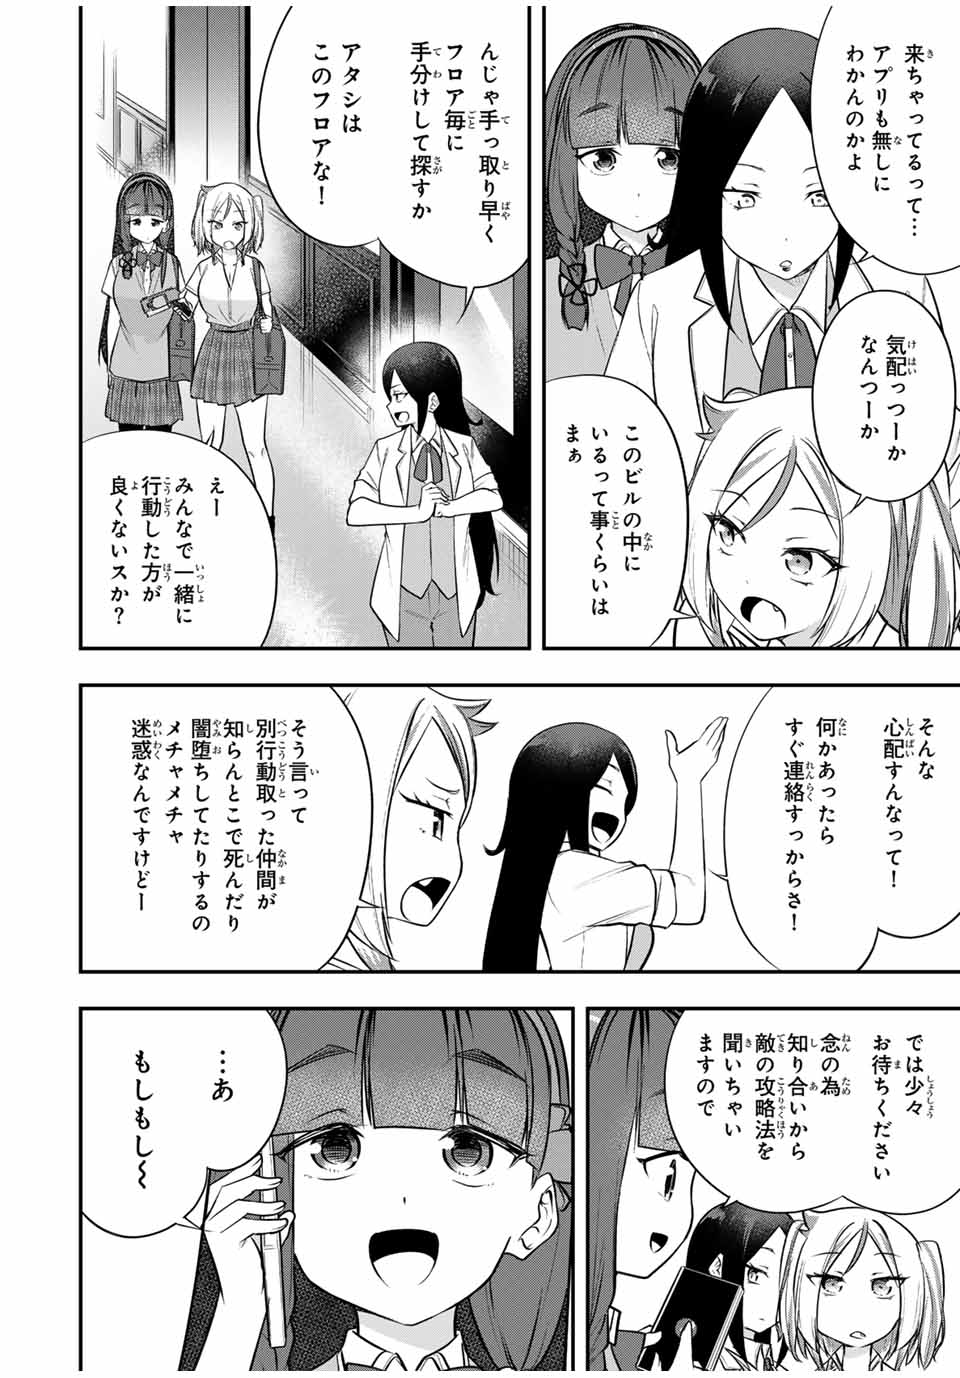 Heroine wa xx Okasegitai - Chapter 13 - Page 12